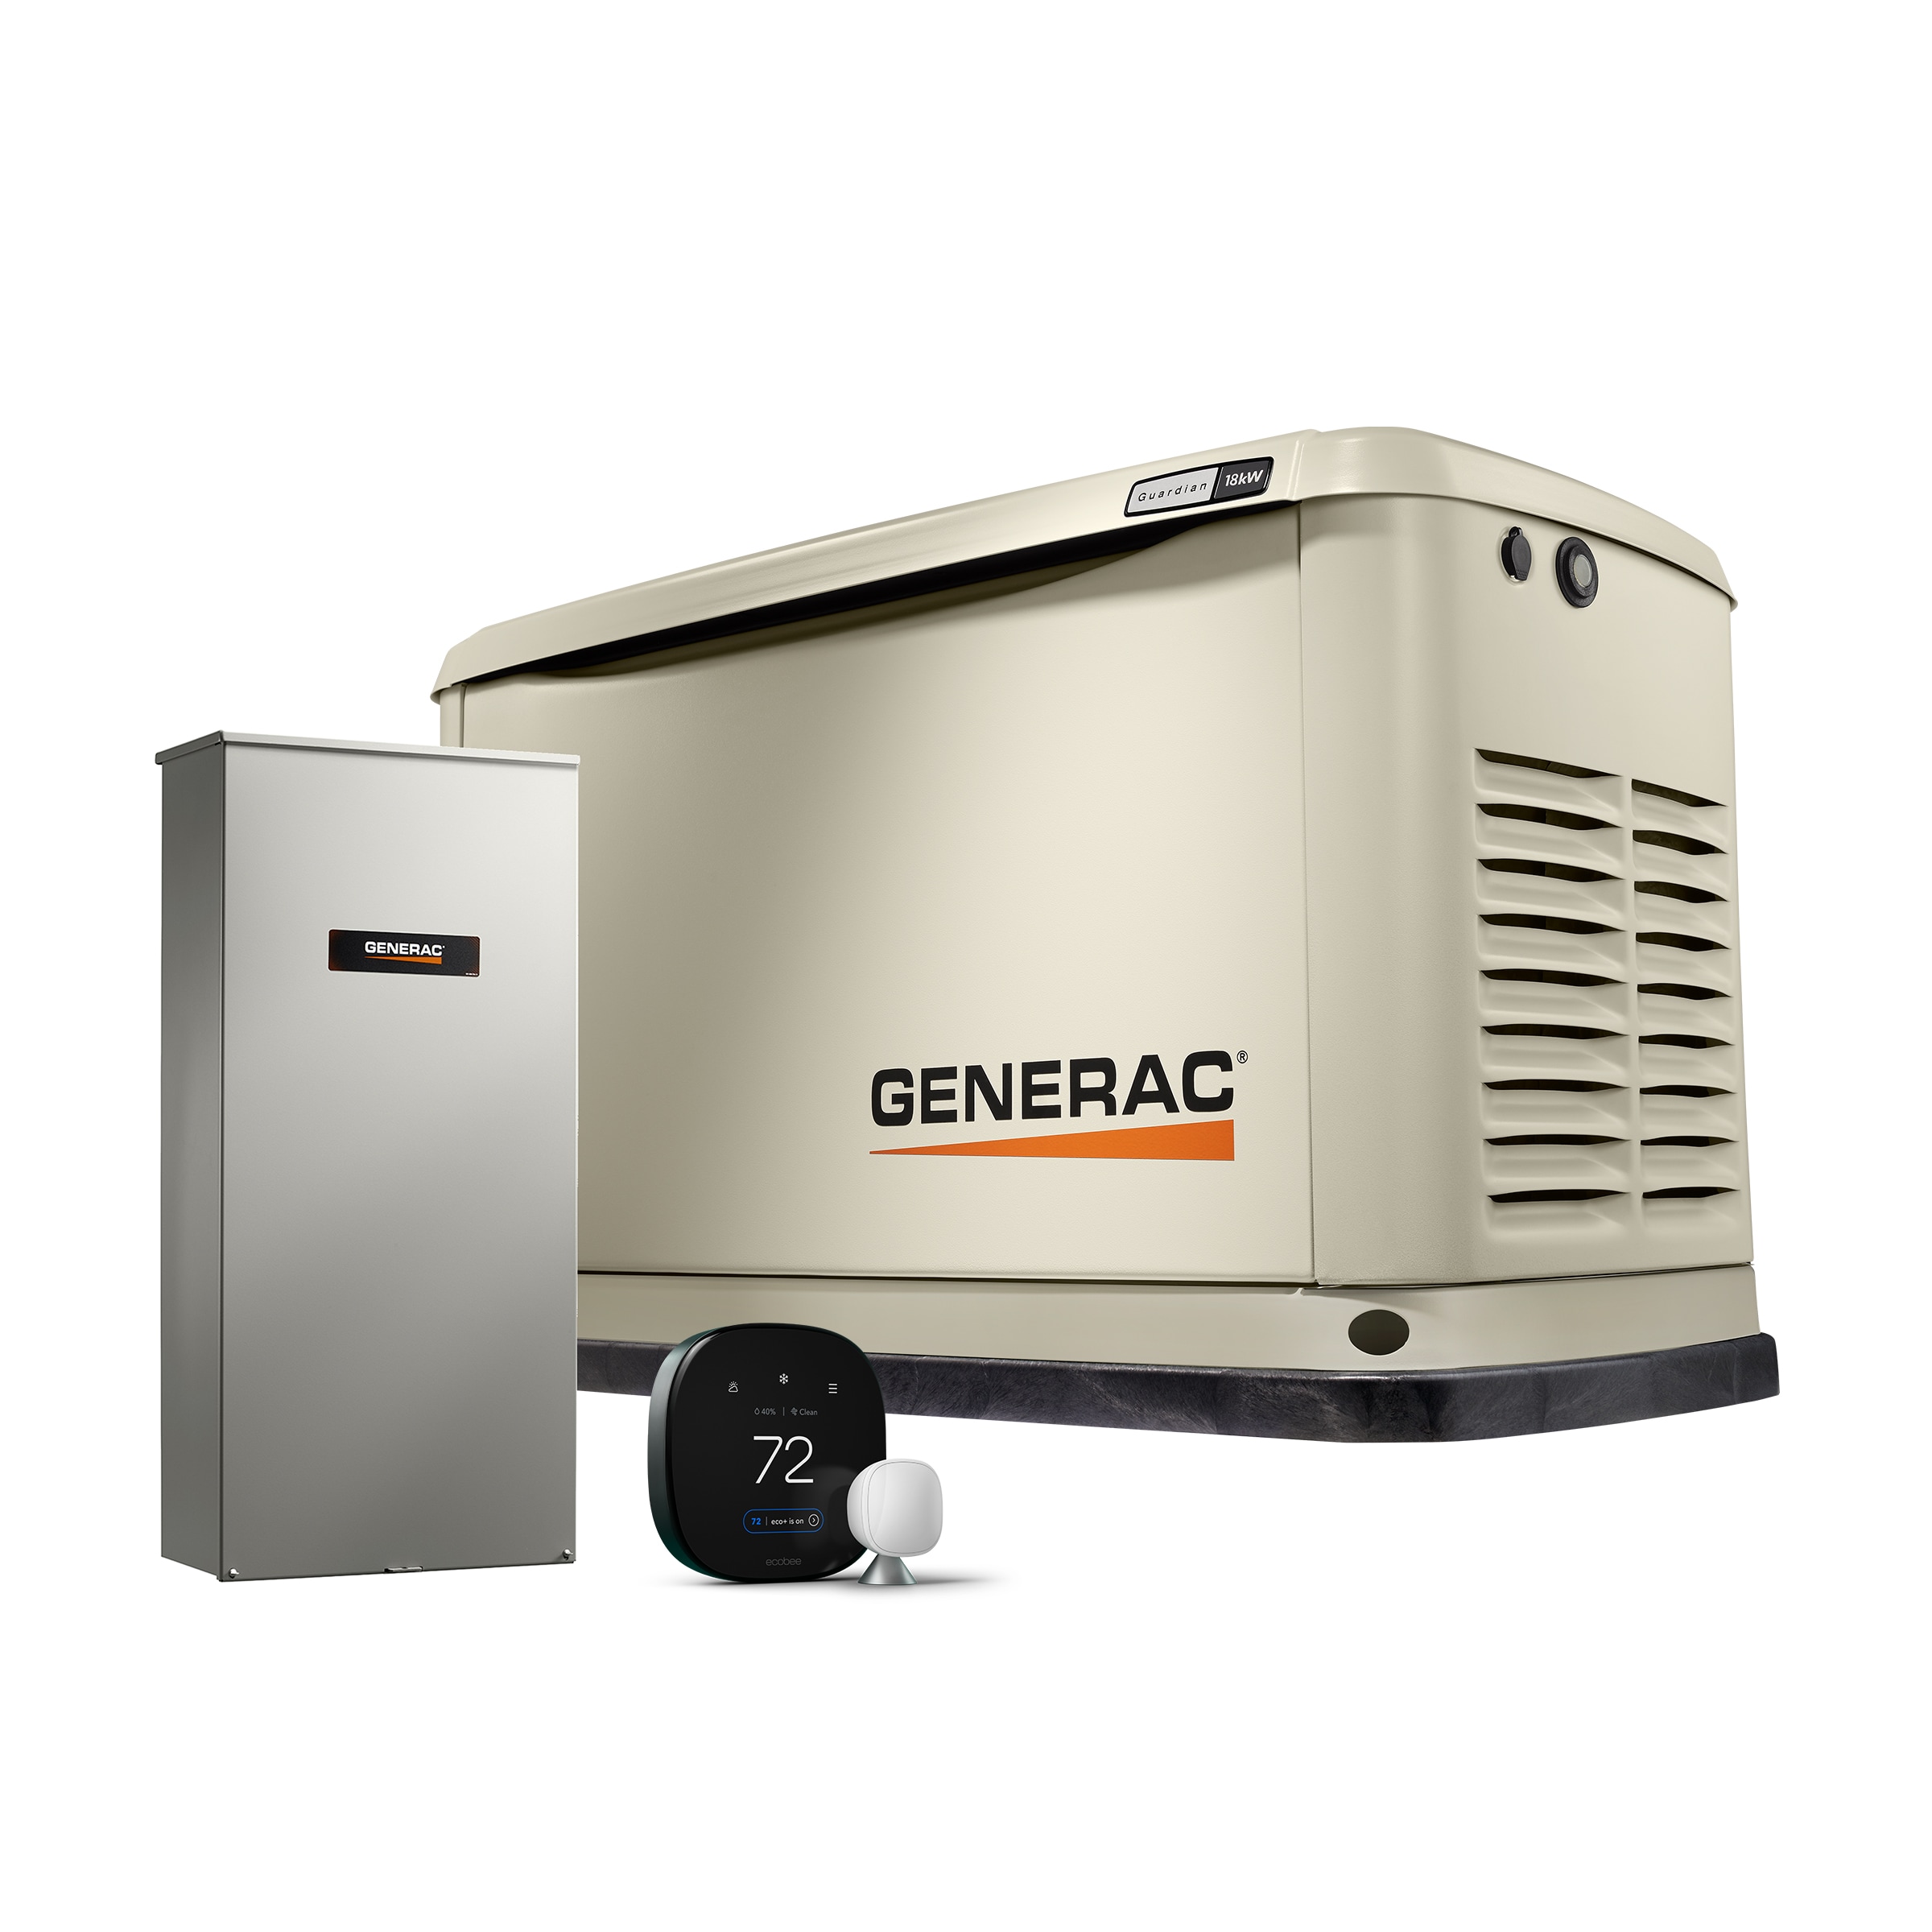 Generac 18kW Home Standby Generator + ecobee Smart Thermostat Premium Bundle